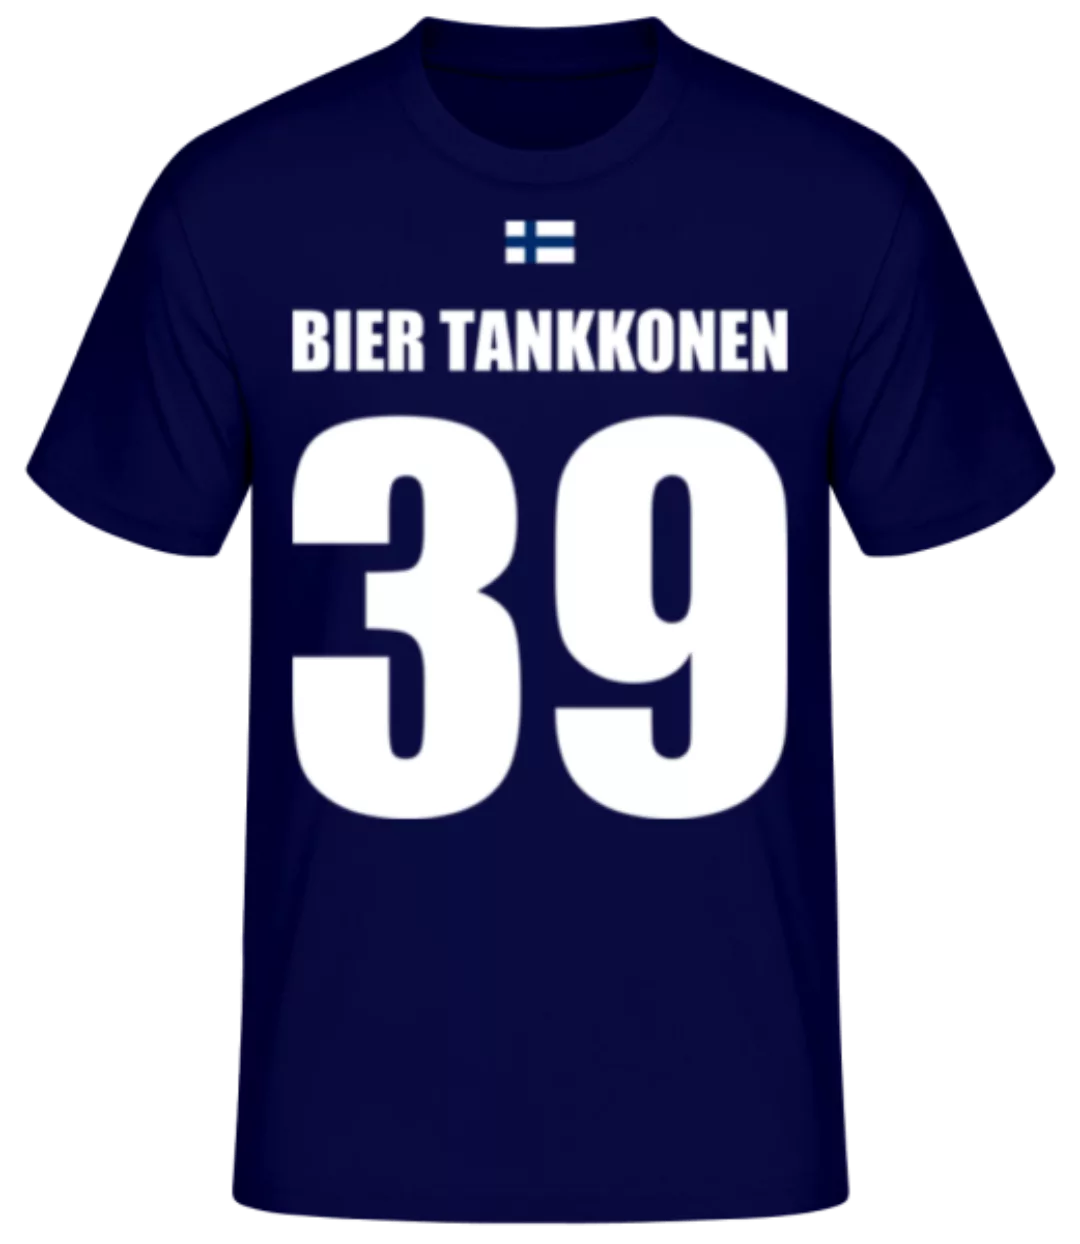 Finnland Fußball Trikot Bier Tankkonen · Männer Basic T-Shirt günstig online kaufen